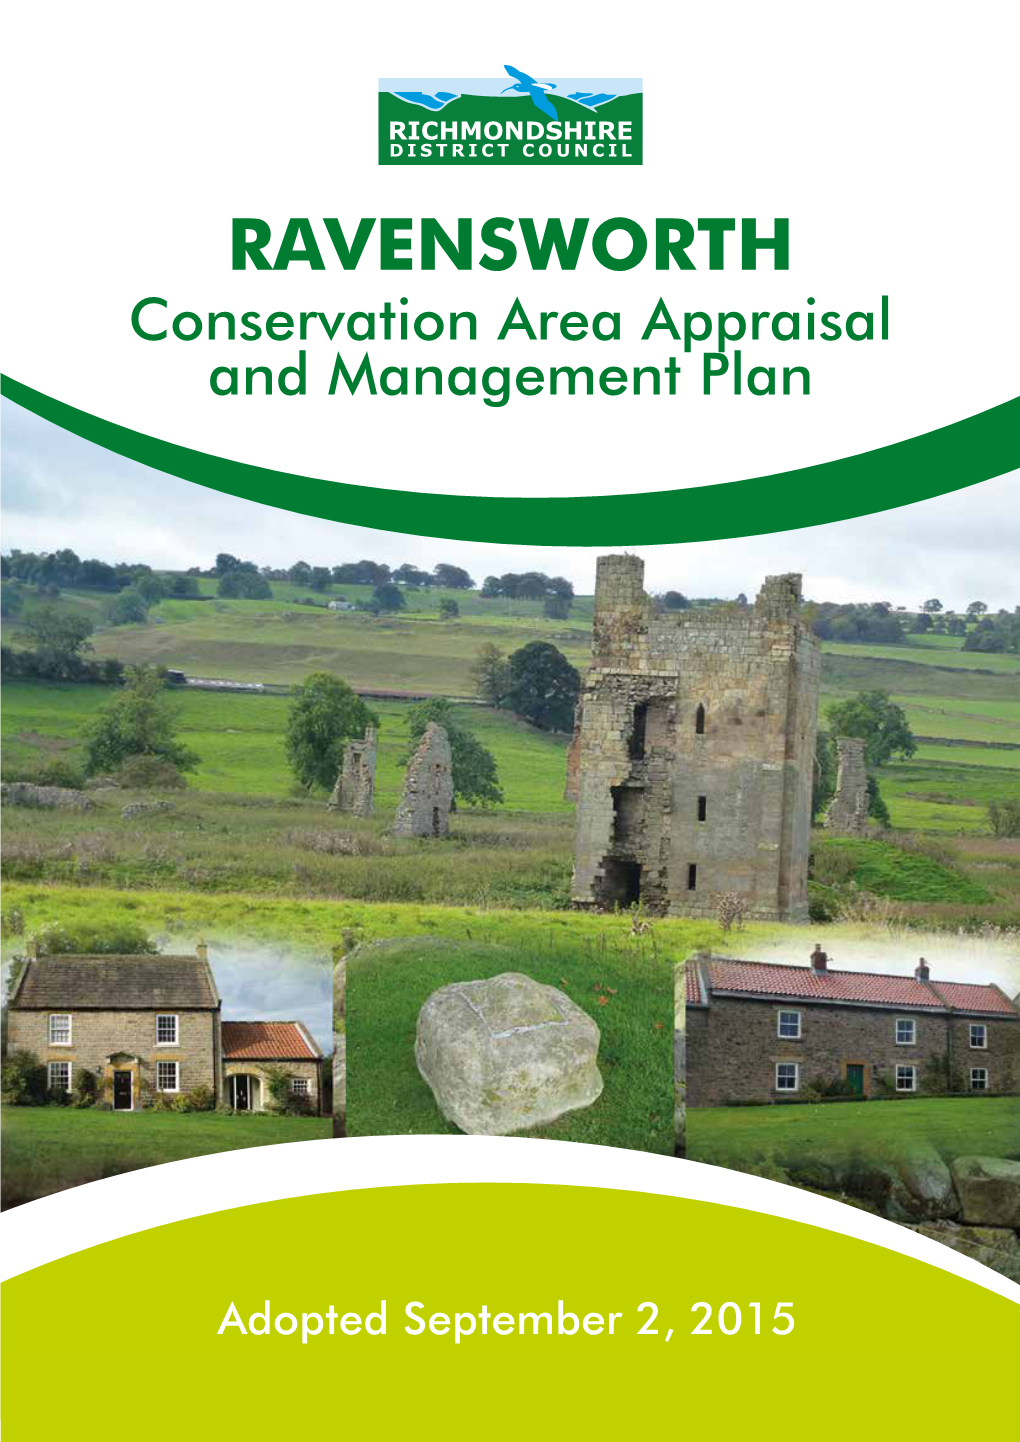 RAVENSWORTH Conservation Area Appraisal and Management Plan